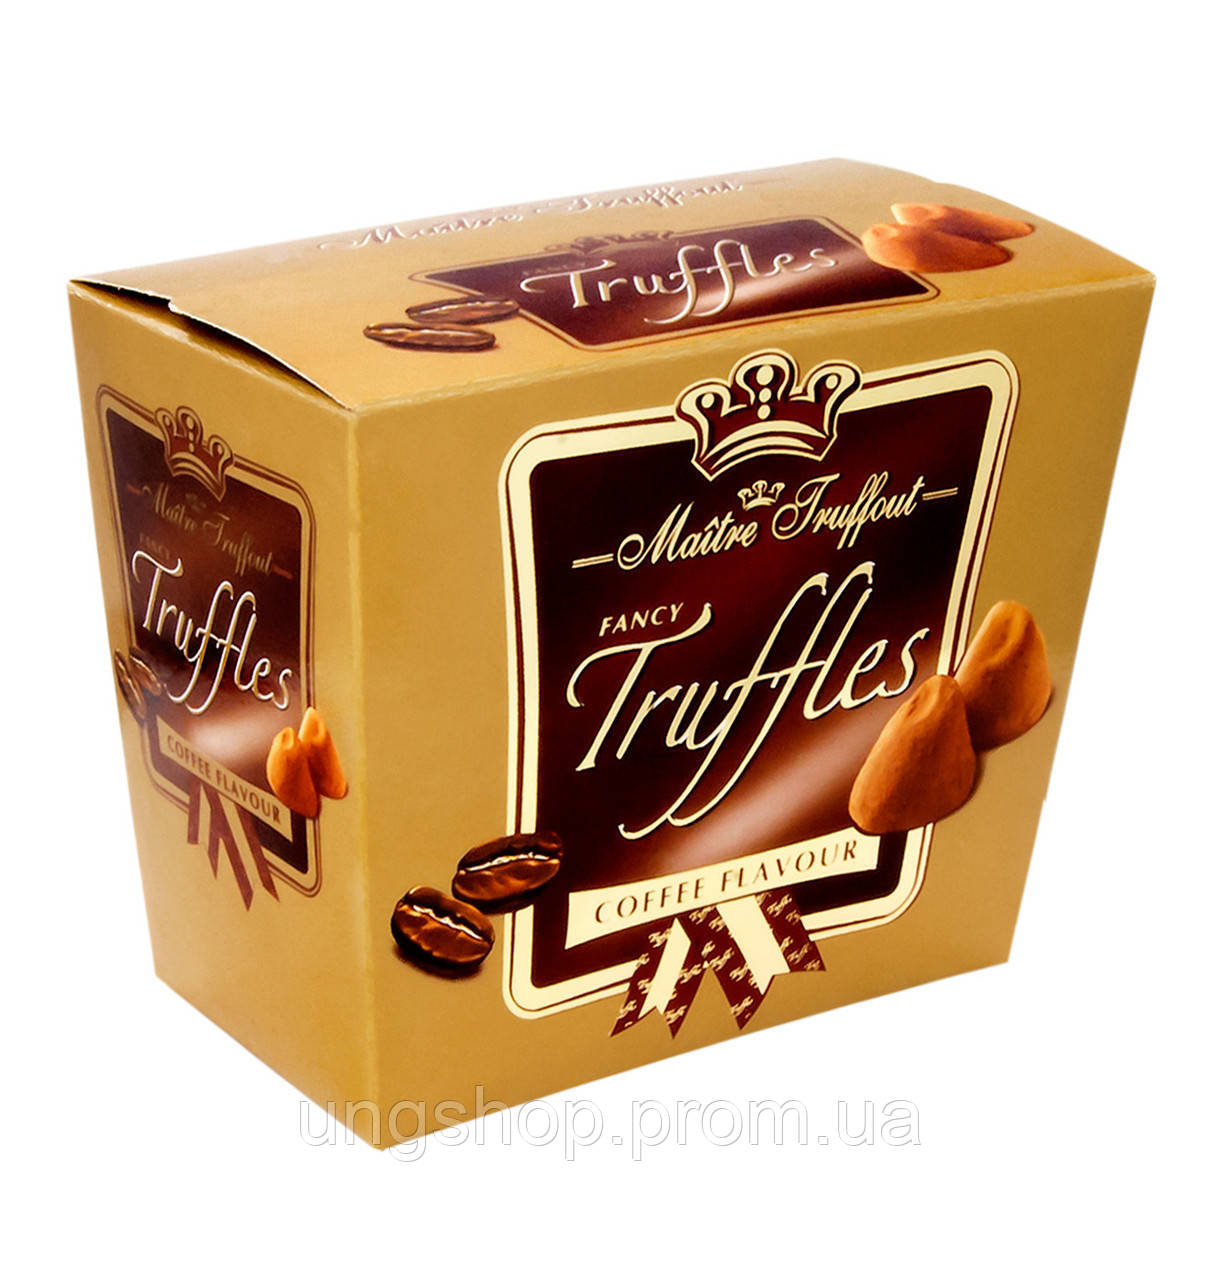 Конфеты Truffles Coffee (Трюфель вкус кофе) Maitre Truffout Австрия 200 г